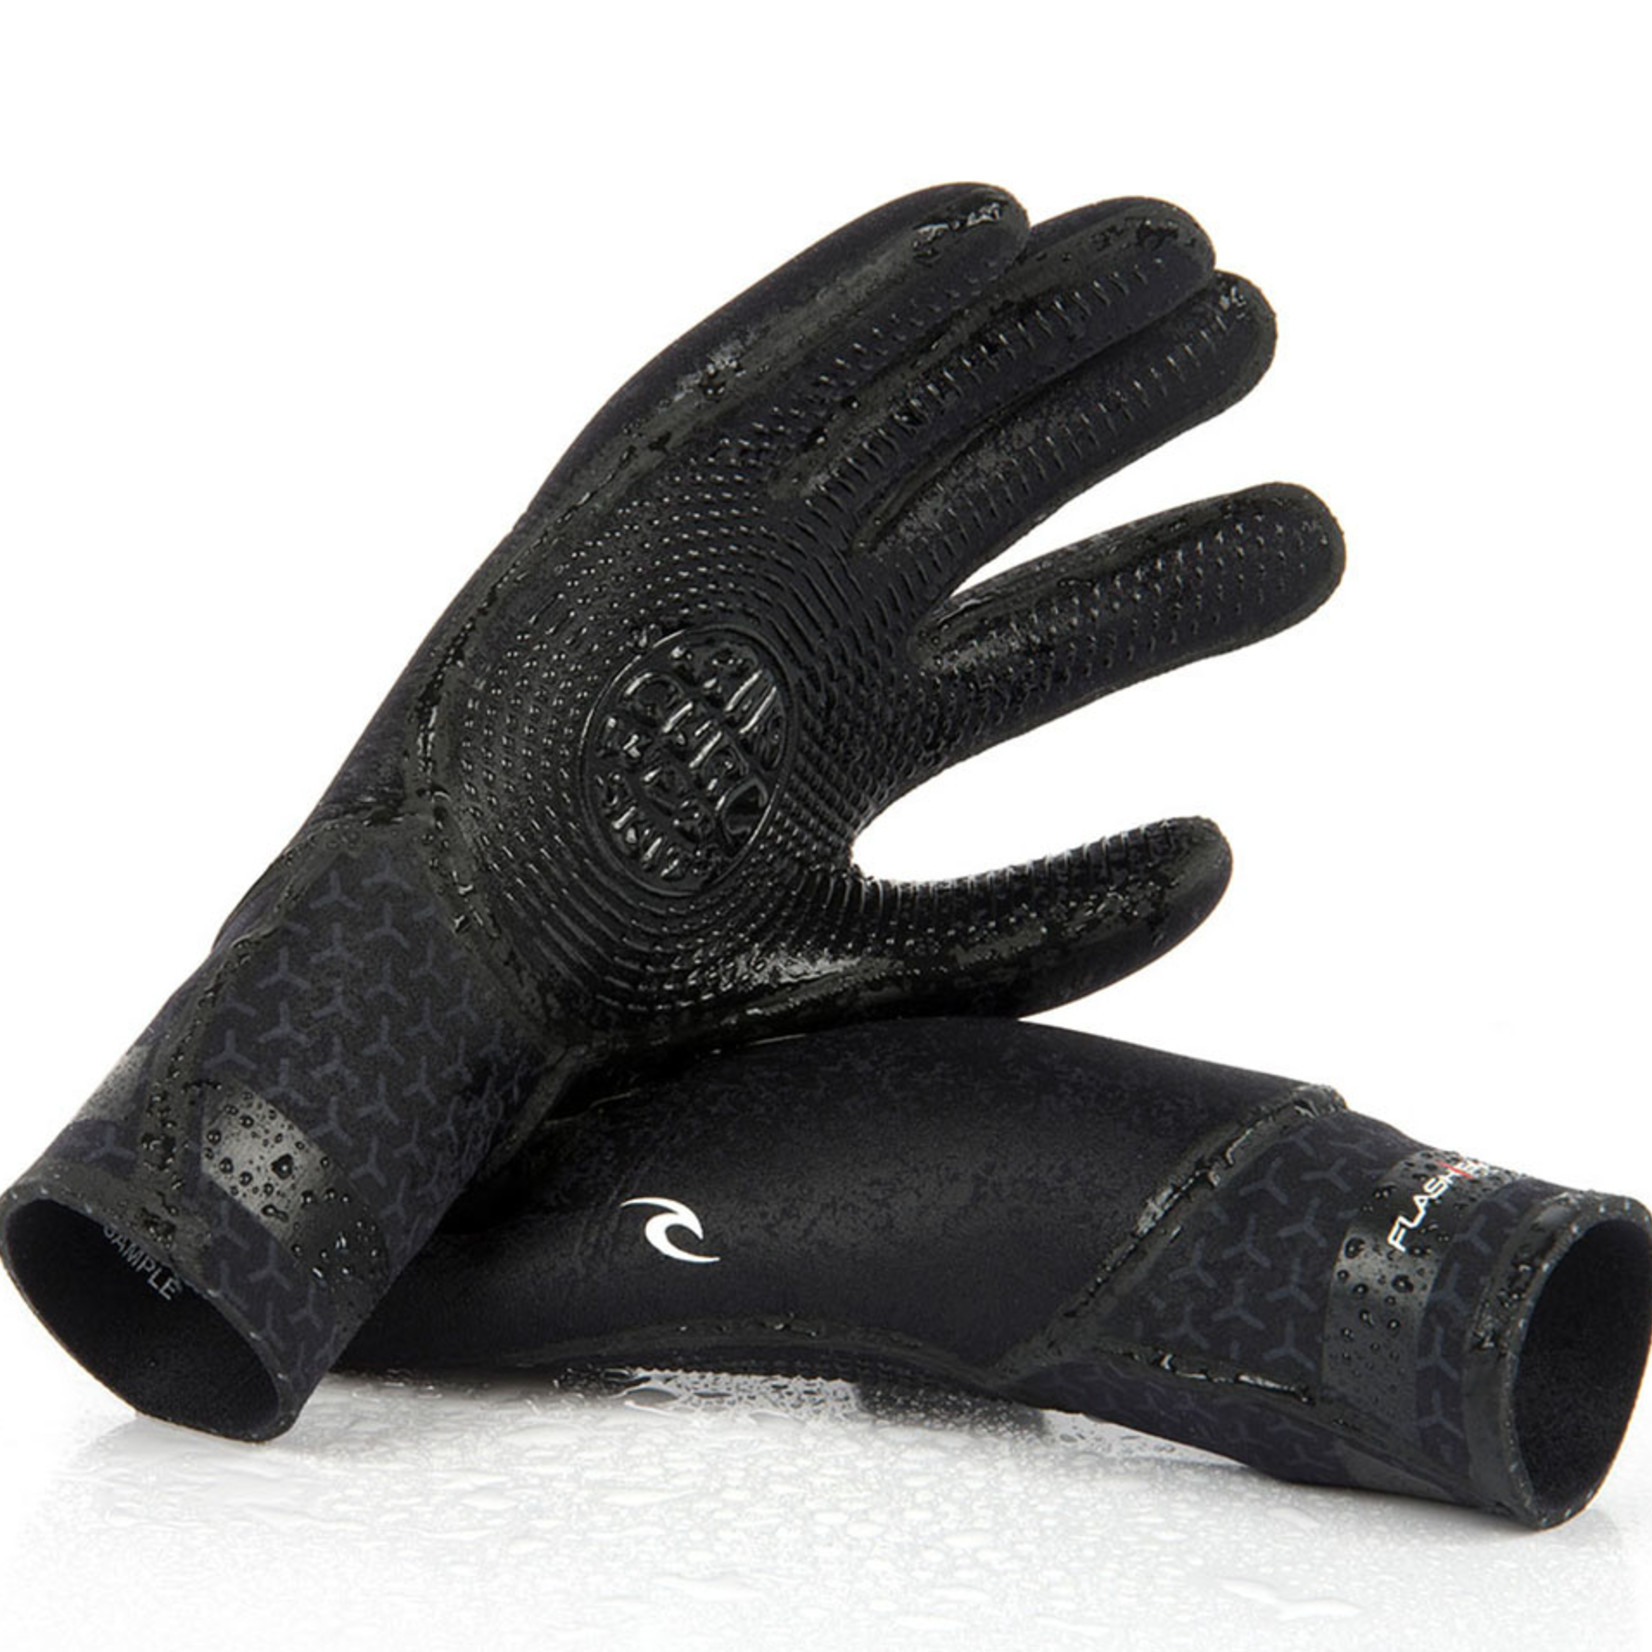 Rip Curl Flashbomb 5/3 5 finger glove